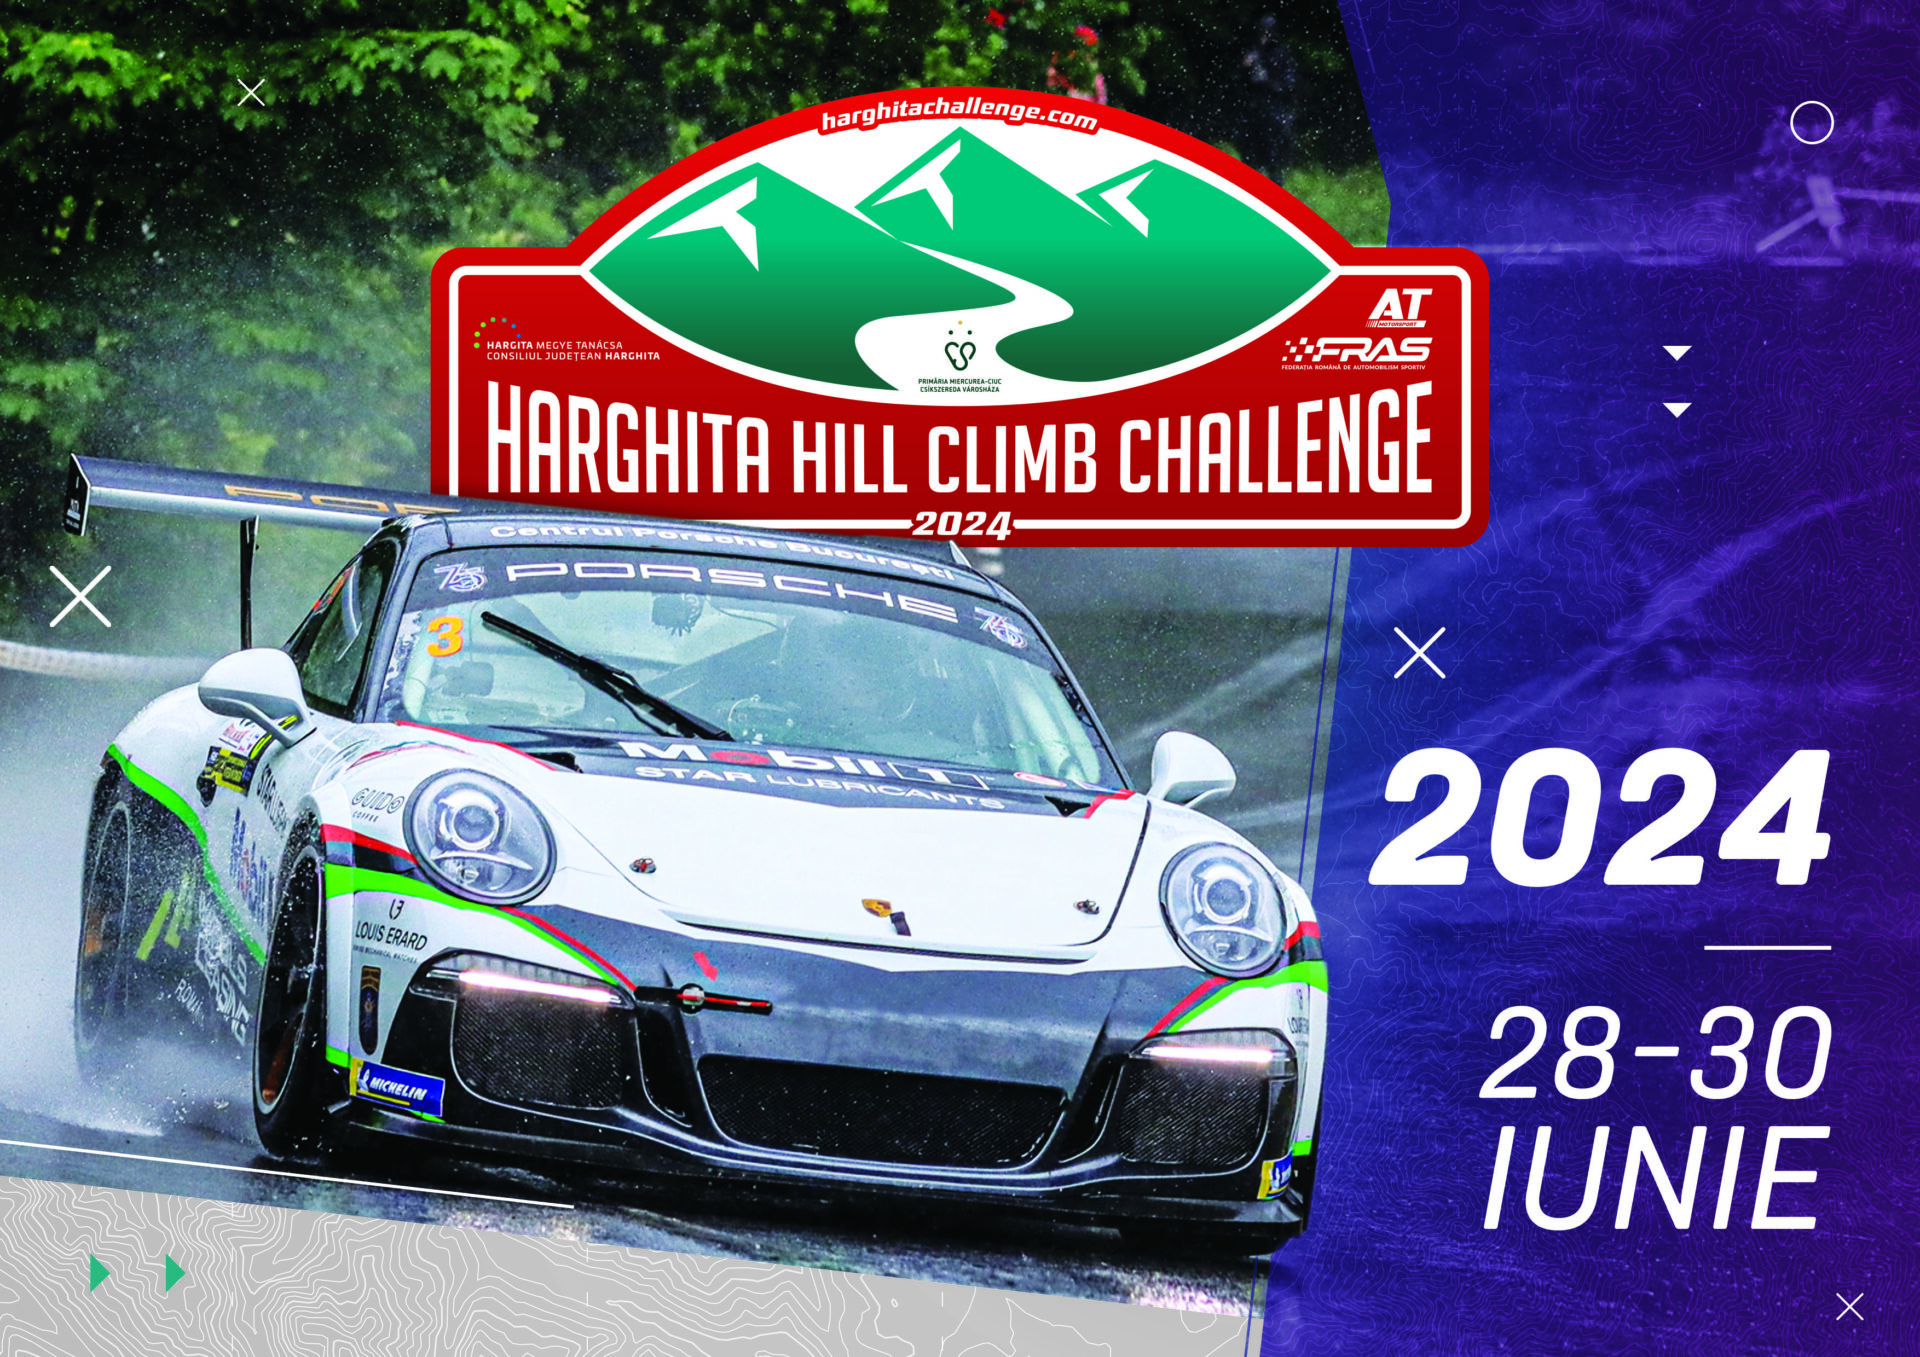 Harghita Hill Climb Challenge. Gata de acțiune în perioada 28-30 iunie 2024